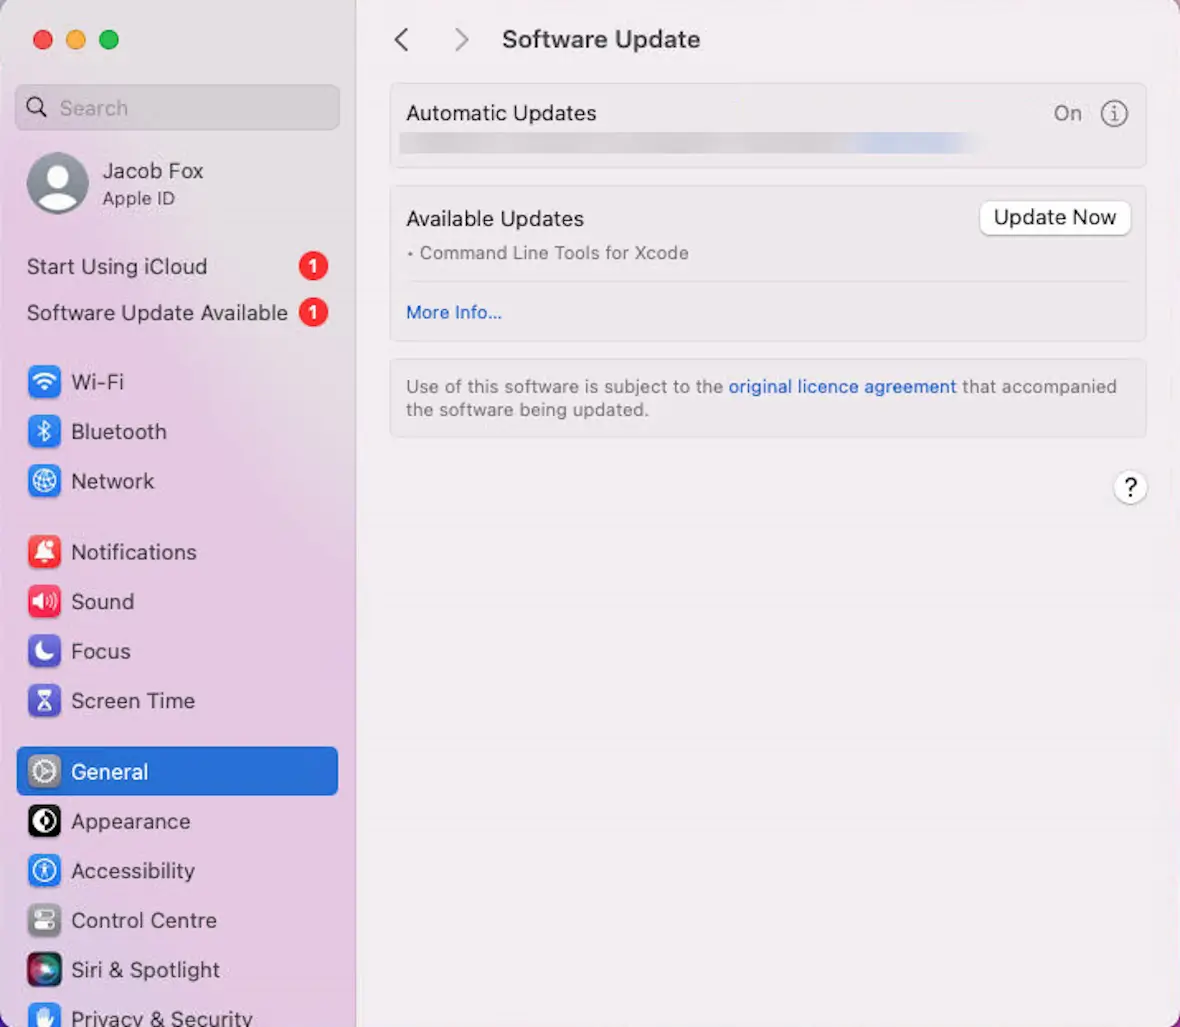 Screenshot of the Software Update screen on macOS.